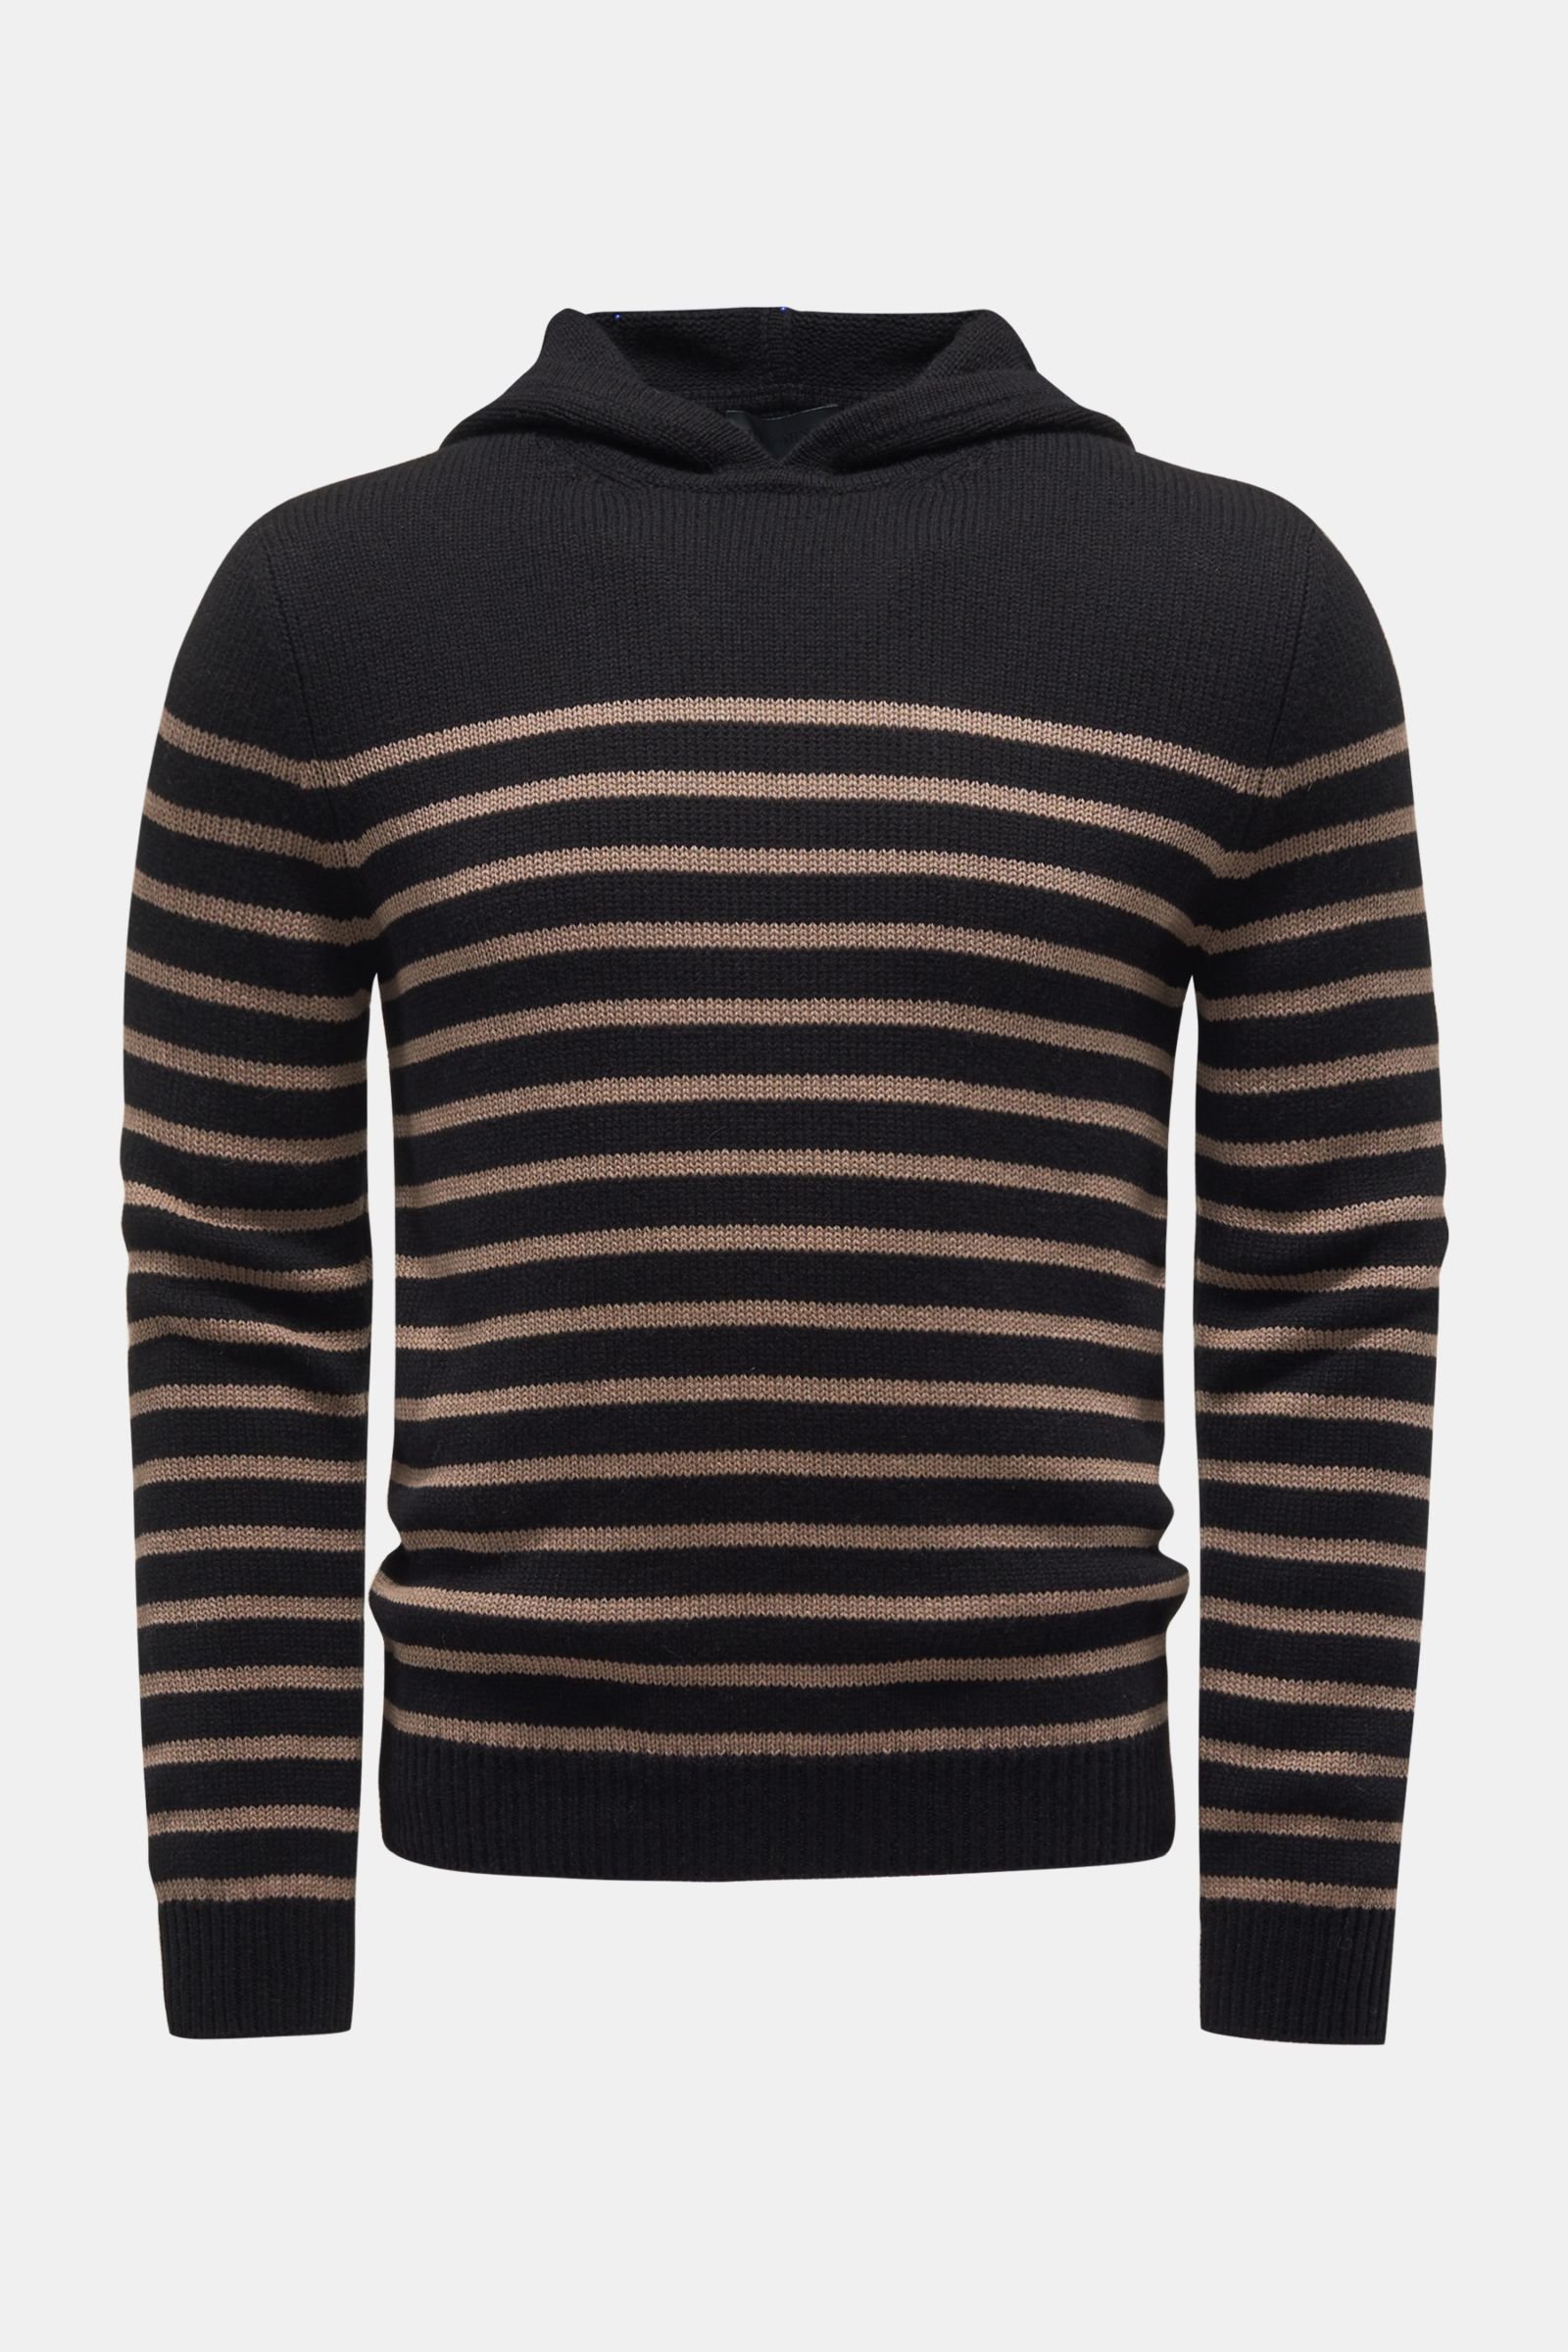 Cashmere hooded jumper 'Bobby' black/grey-brown striped